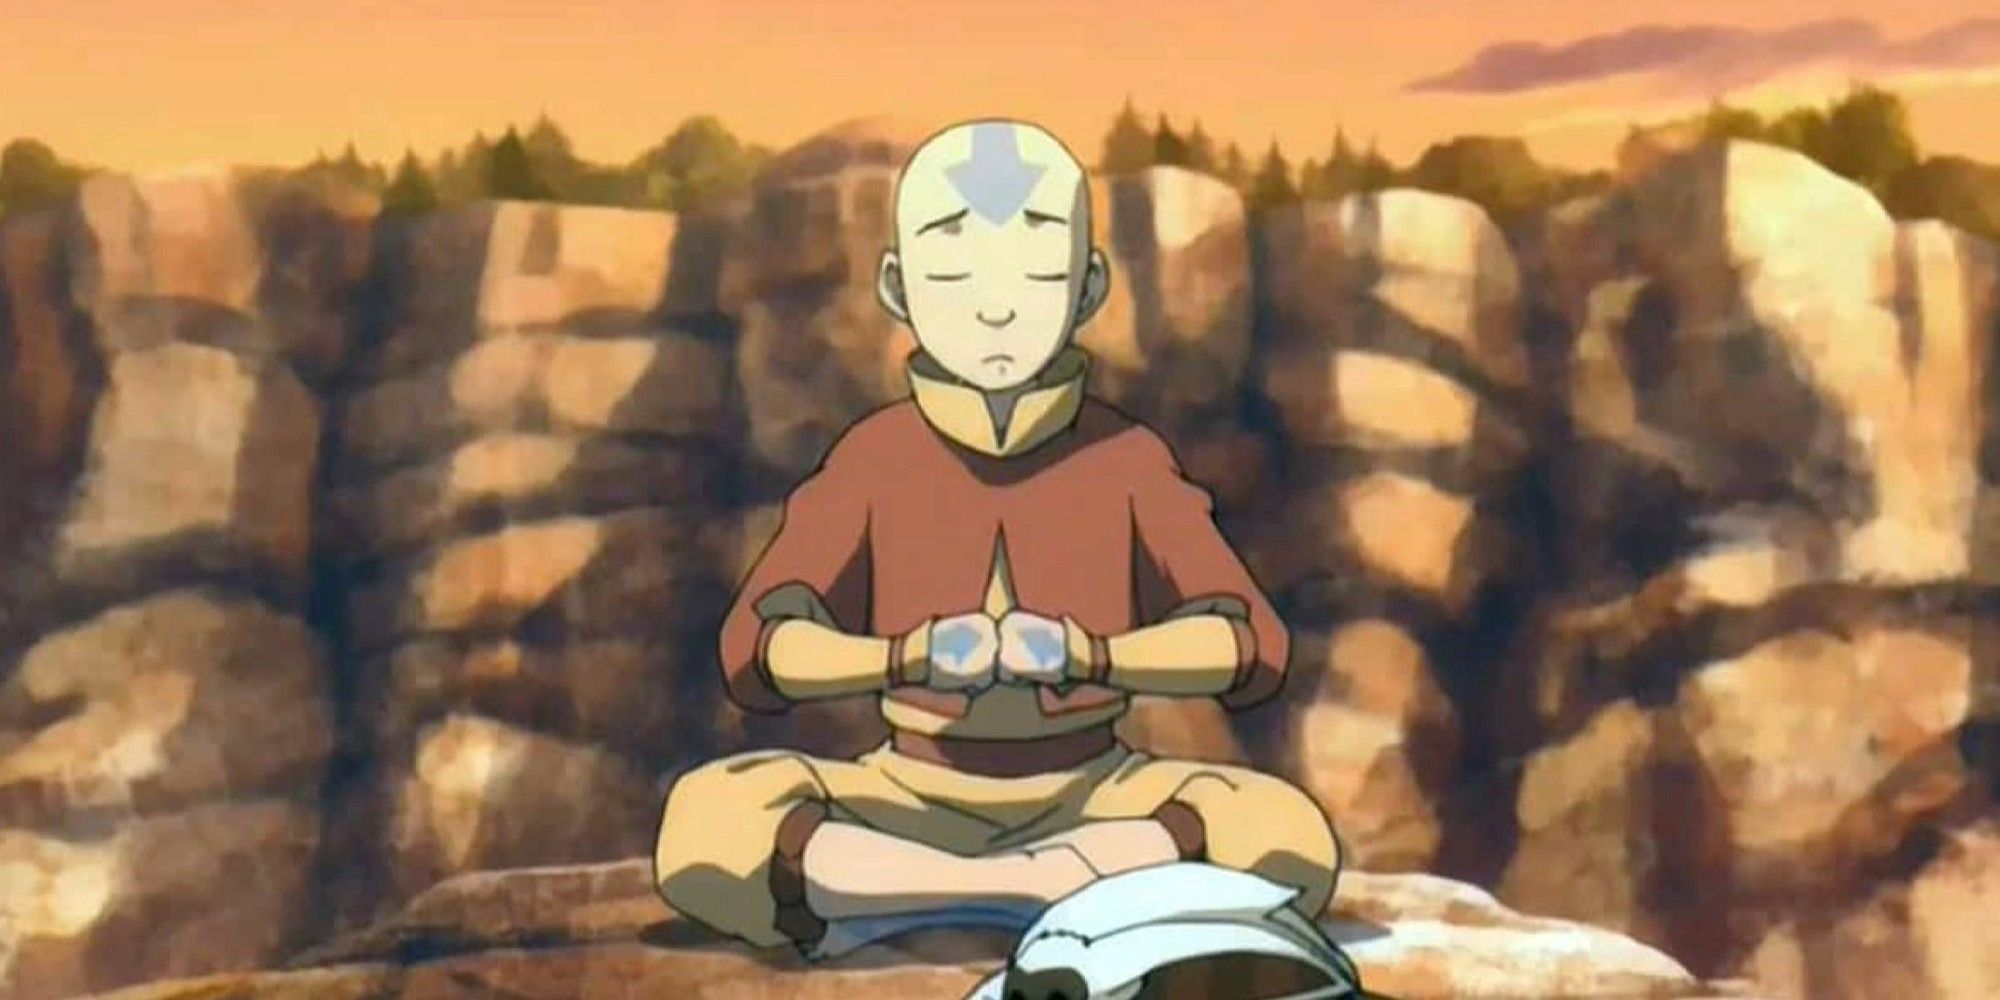 Avatar the Last Airbender Aang mediation pose